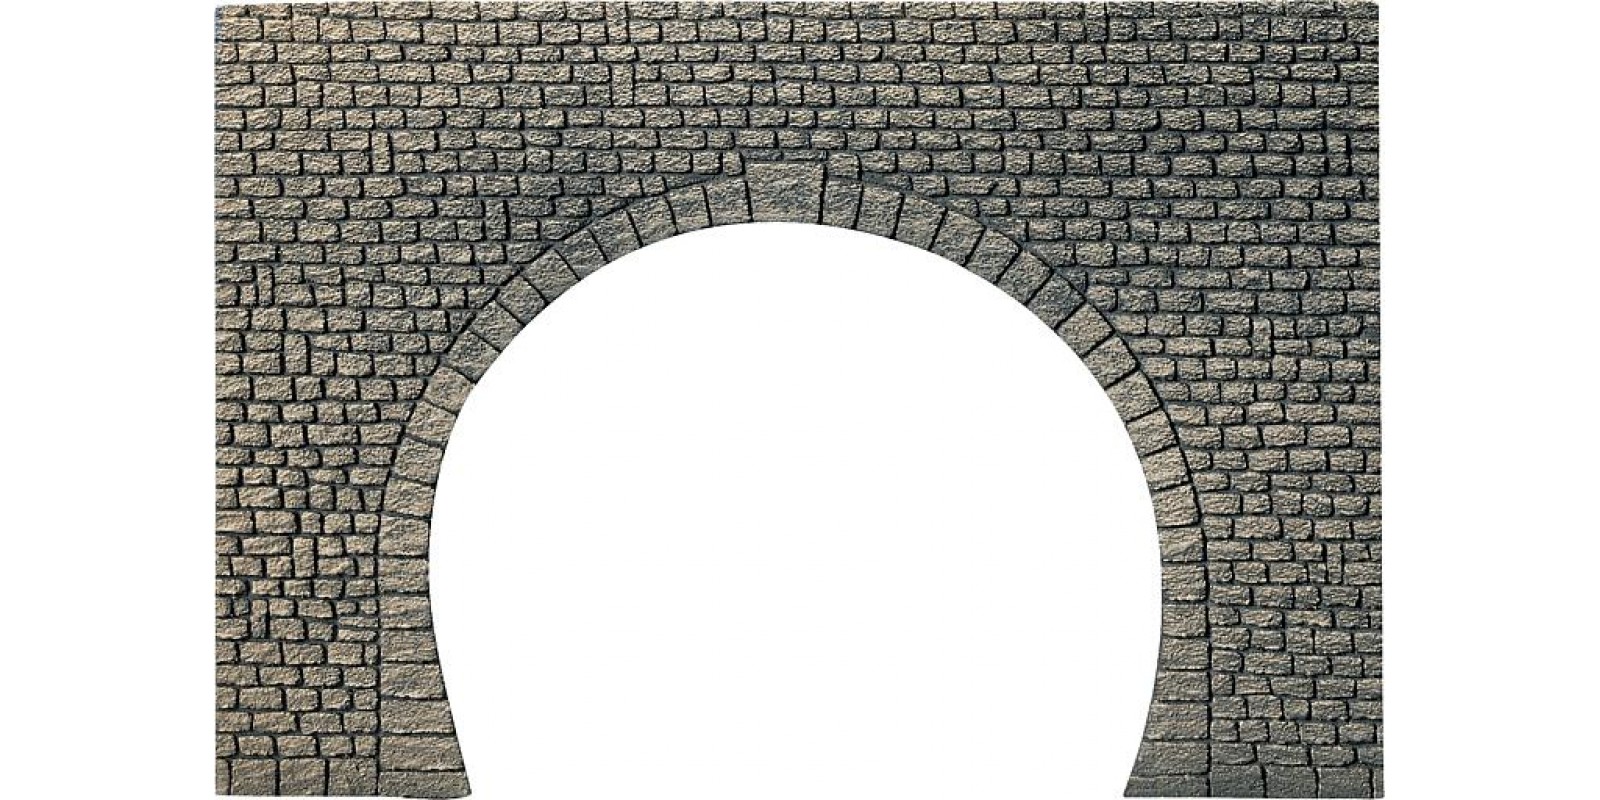 FA170831 Decorative sheet tunnel portal, Natural cut stone